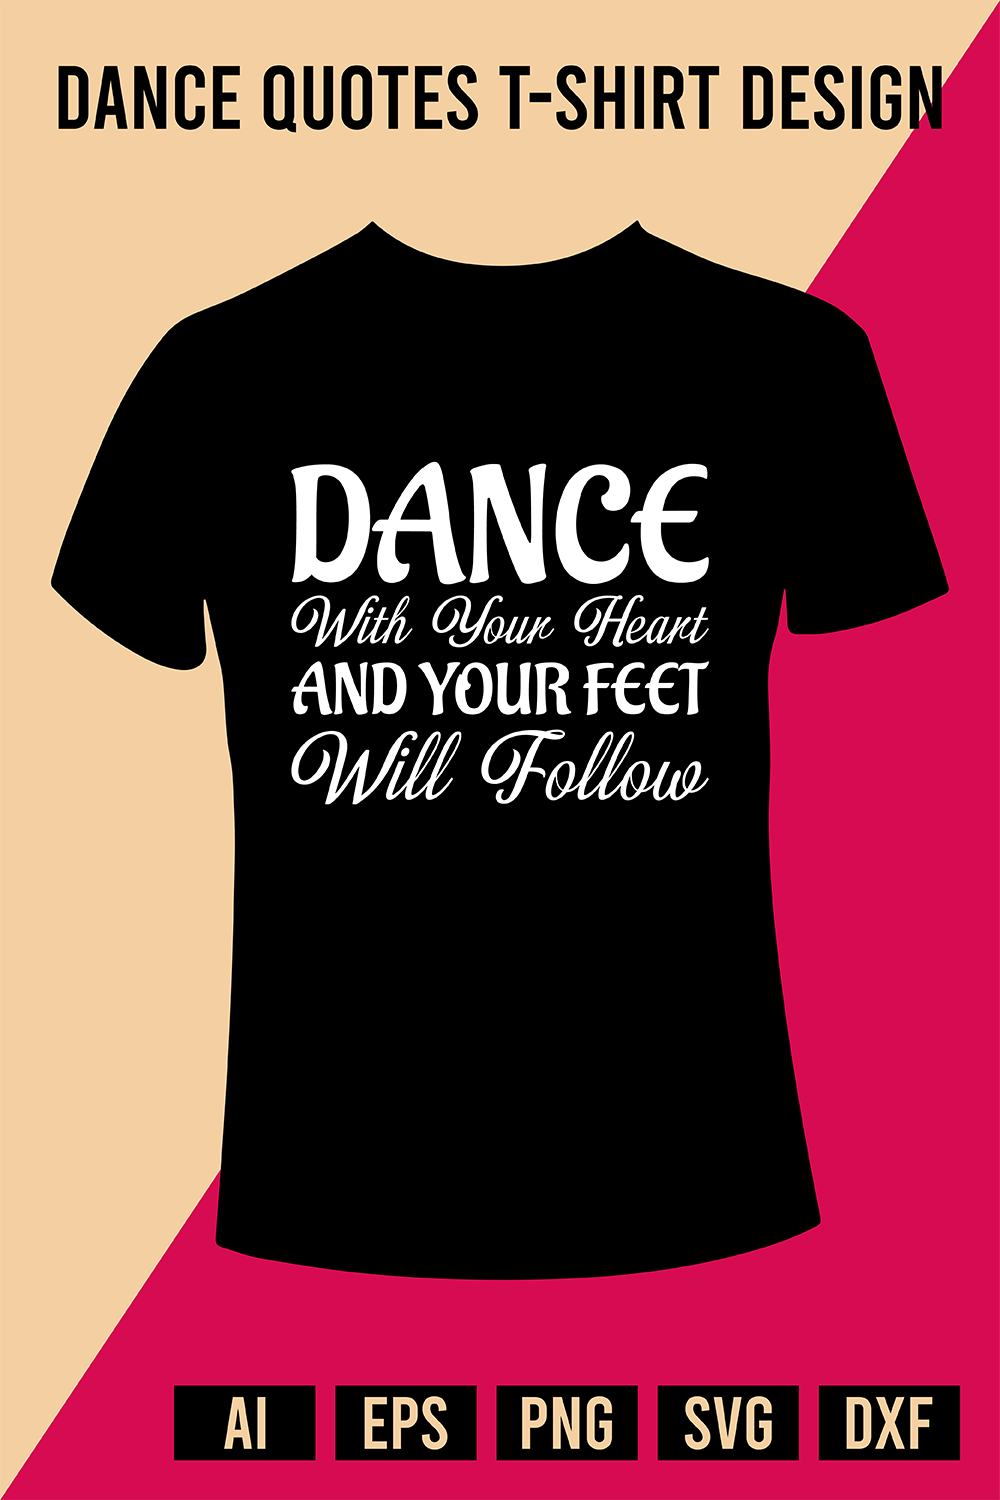 Dance Quotes T-Shirt Design pinterest preview image.